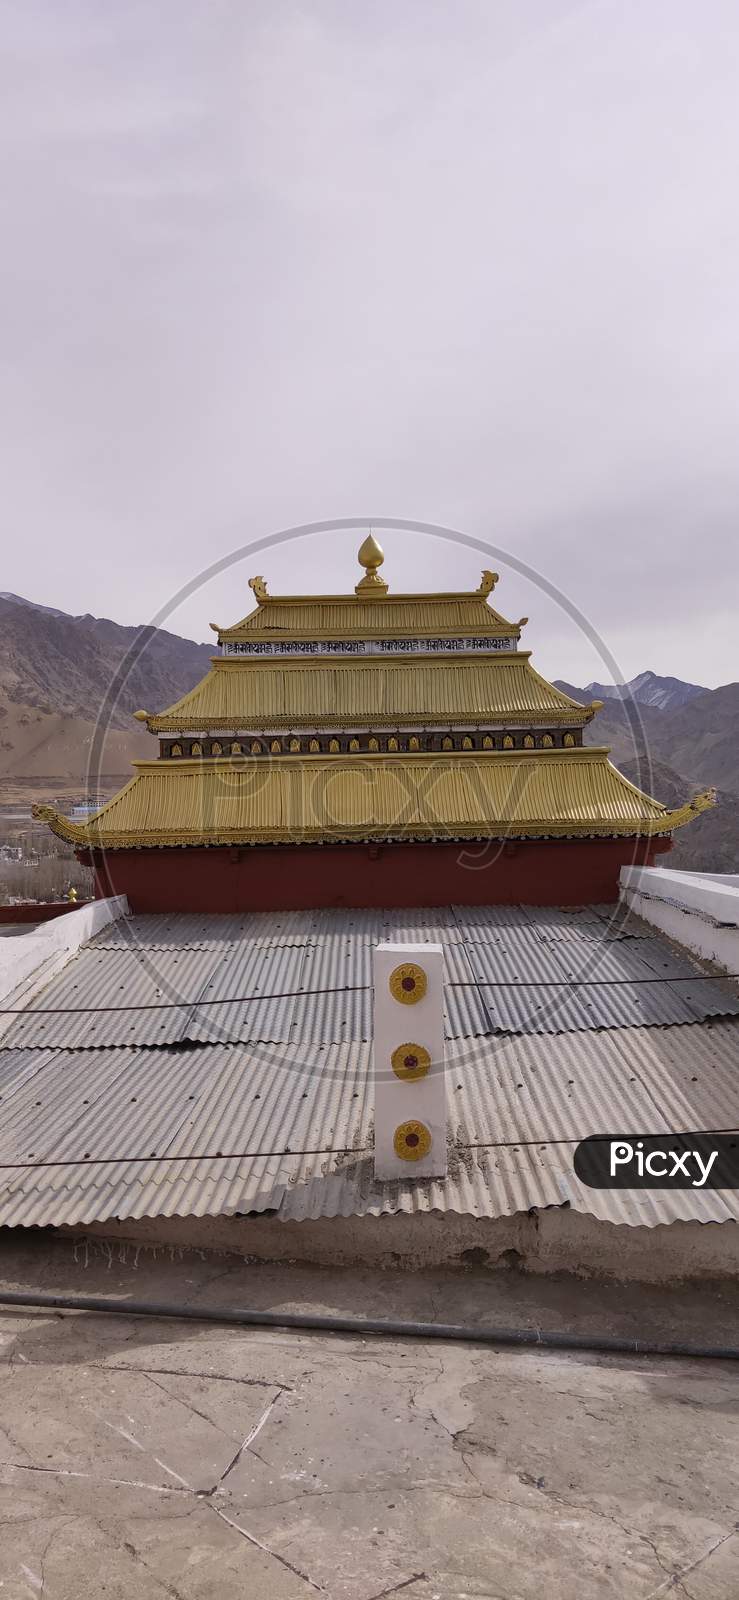 Shanti Stupa is a Buddhist white-domed stupa on a hilltop in Chanspa, Leh district, Ladakh,